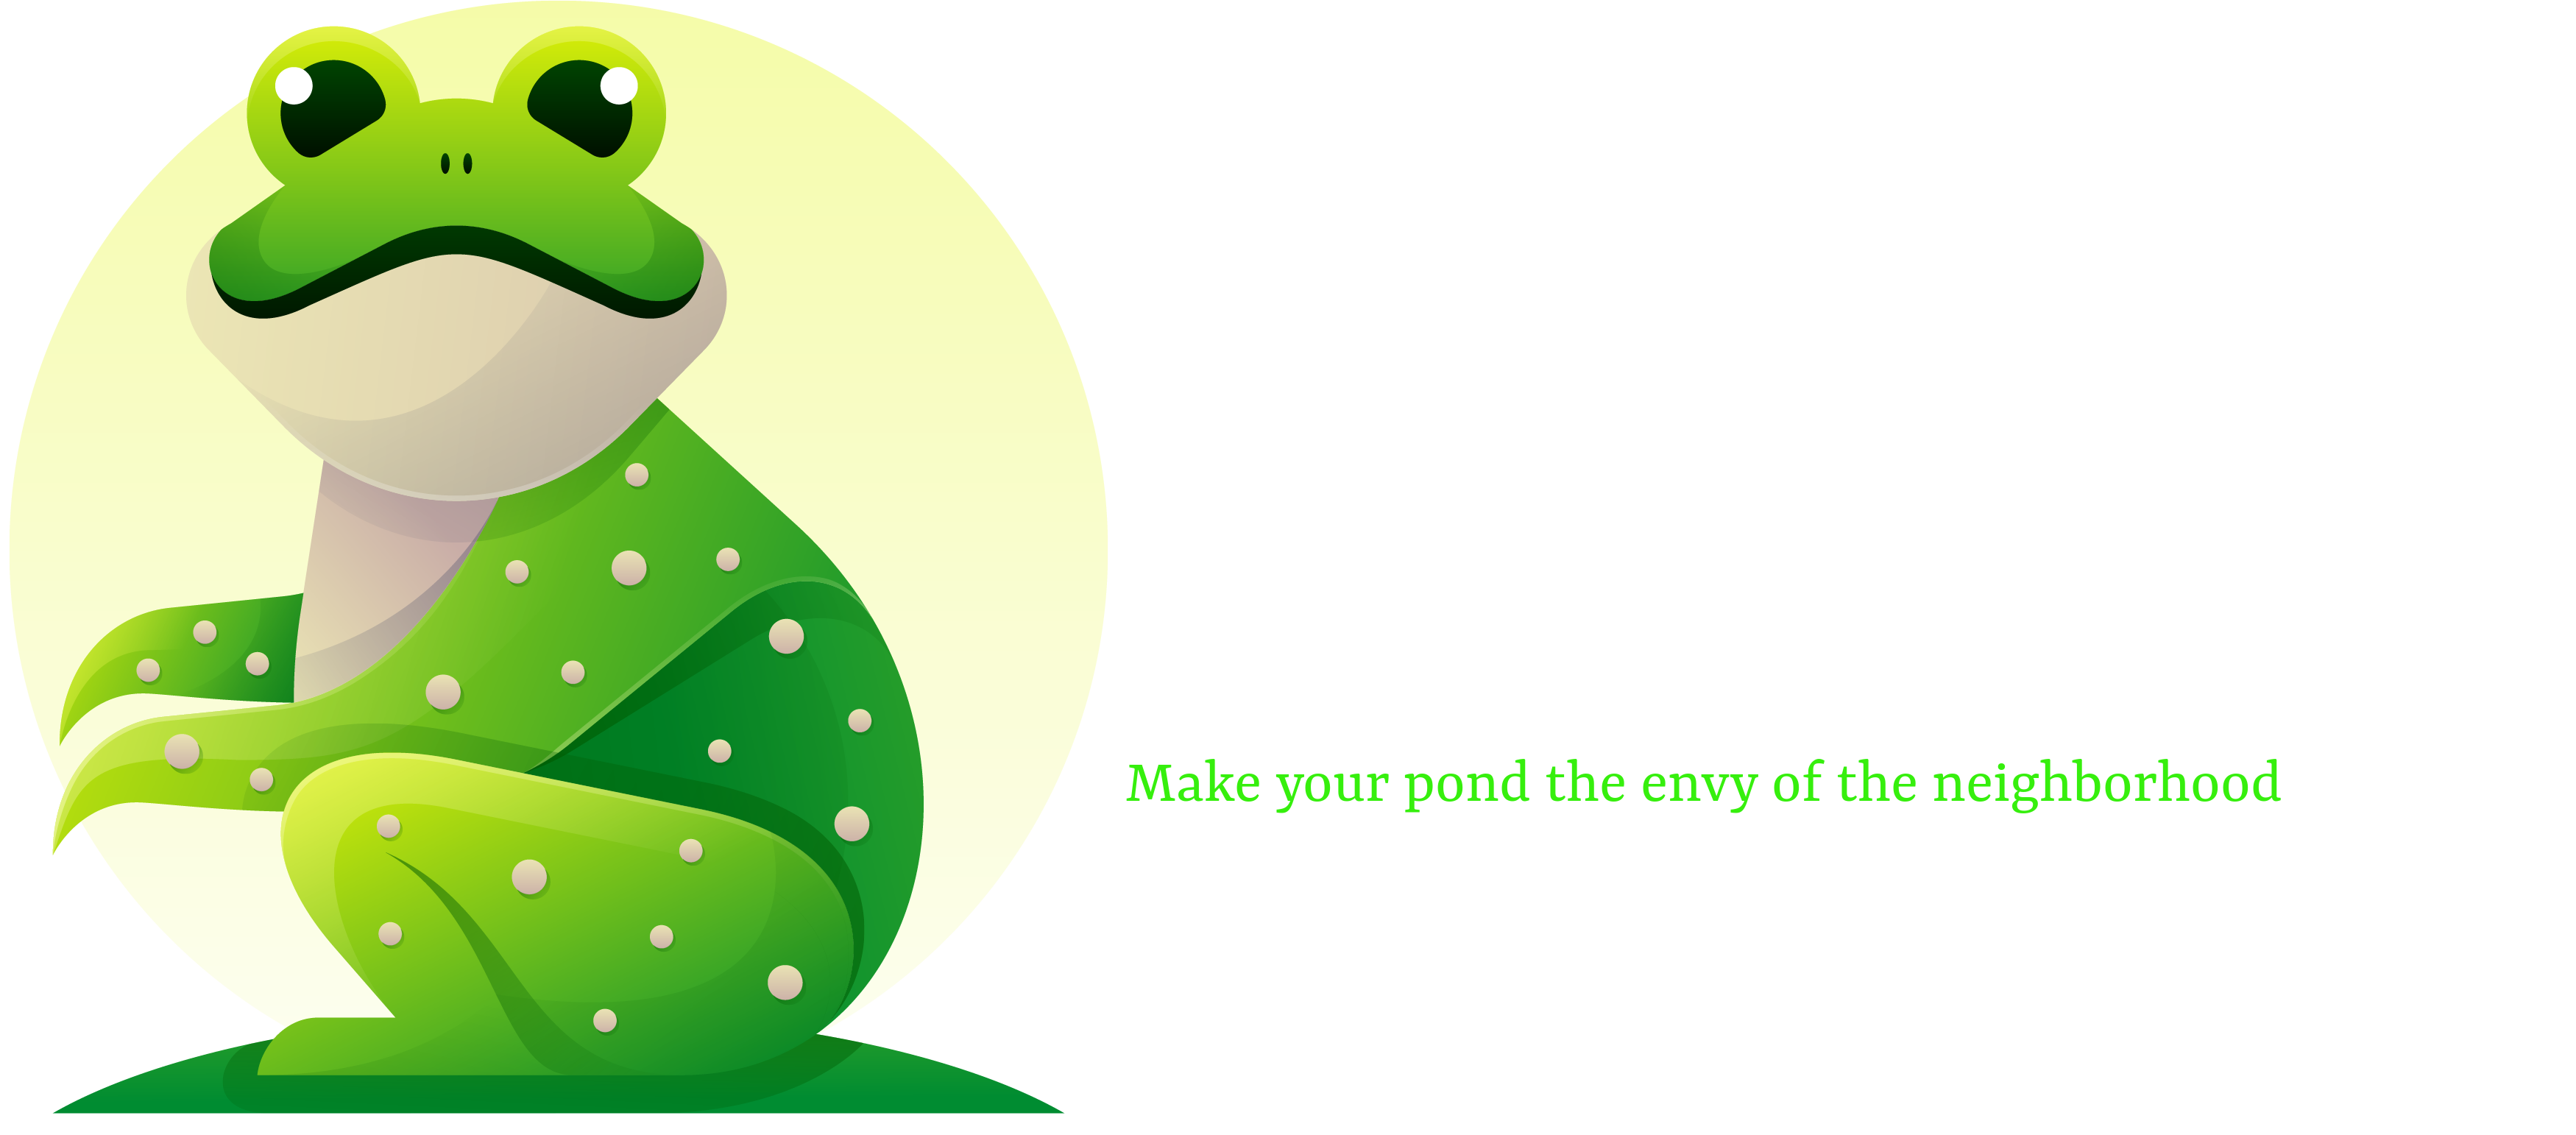 The Pondineer